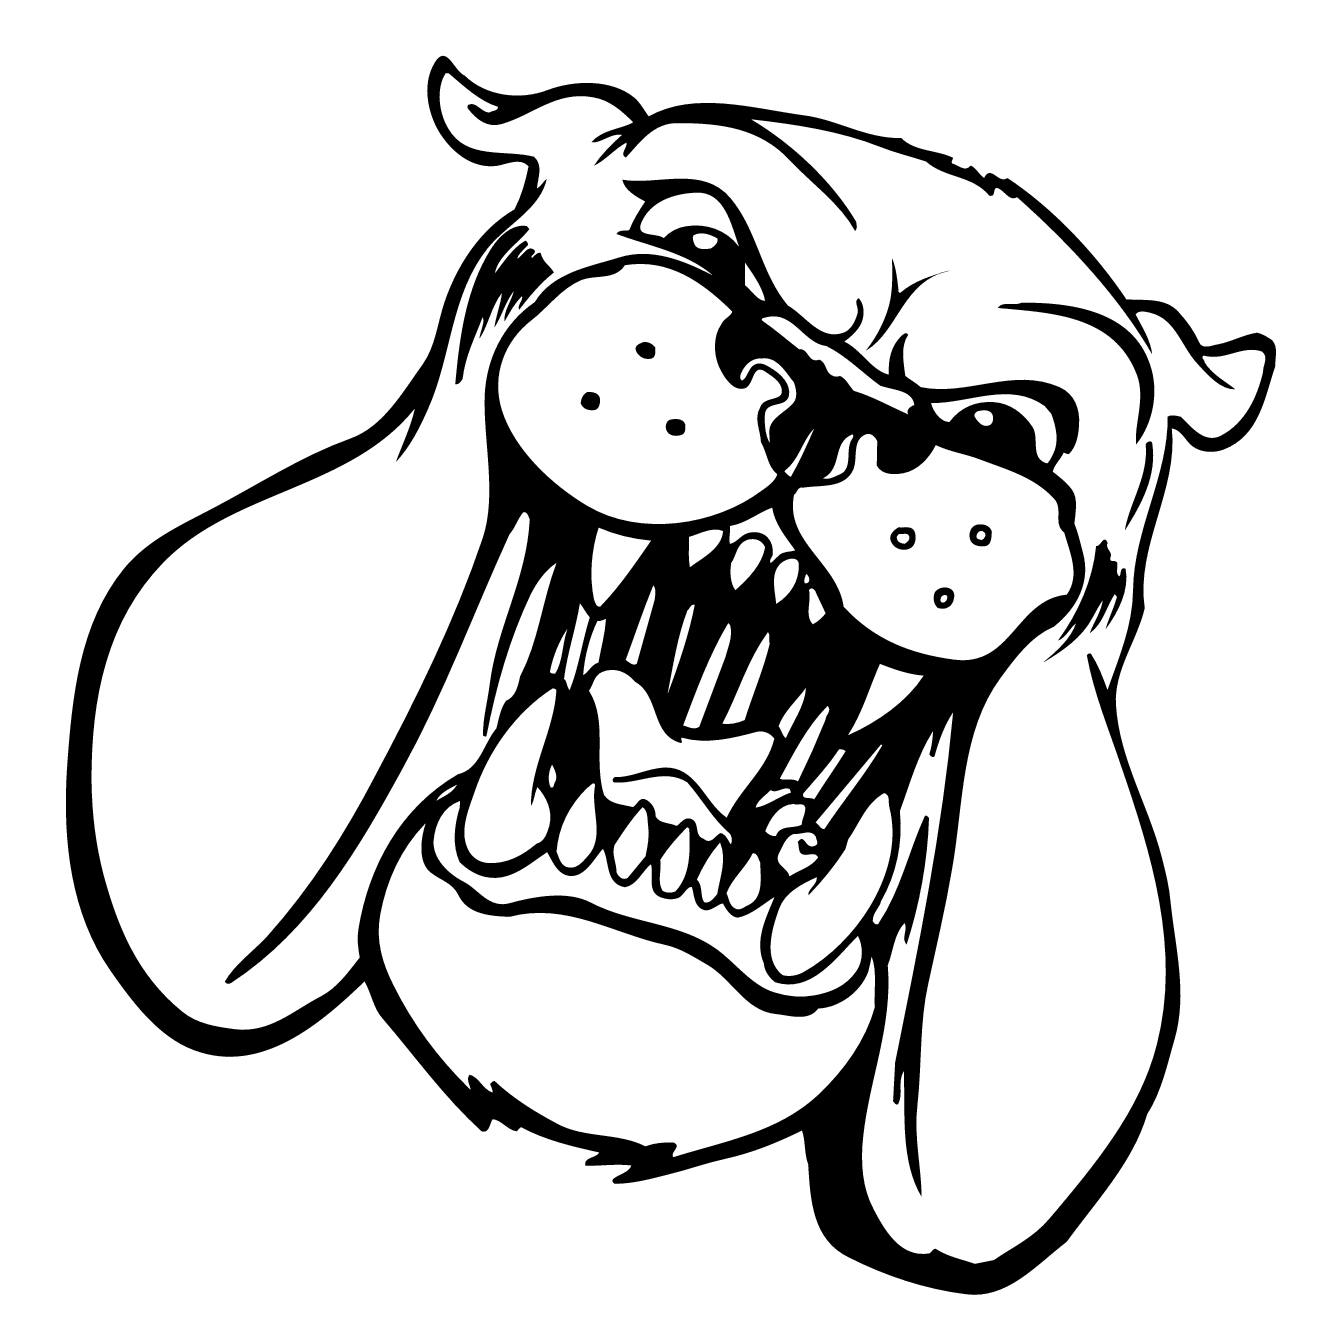 Free Bulldog Clip Art For Logos | Clipart Panda - Free Clipart Images